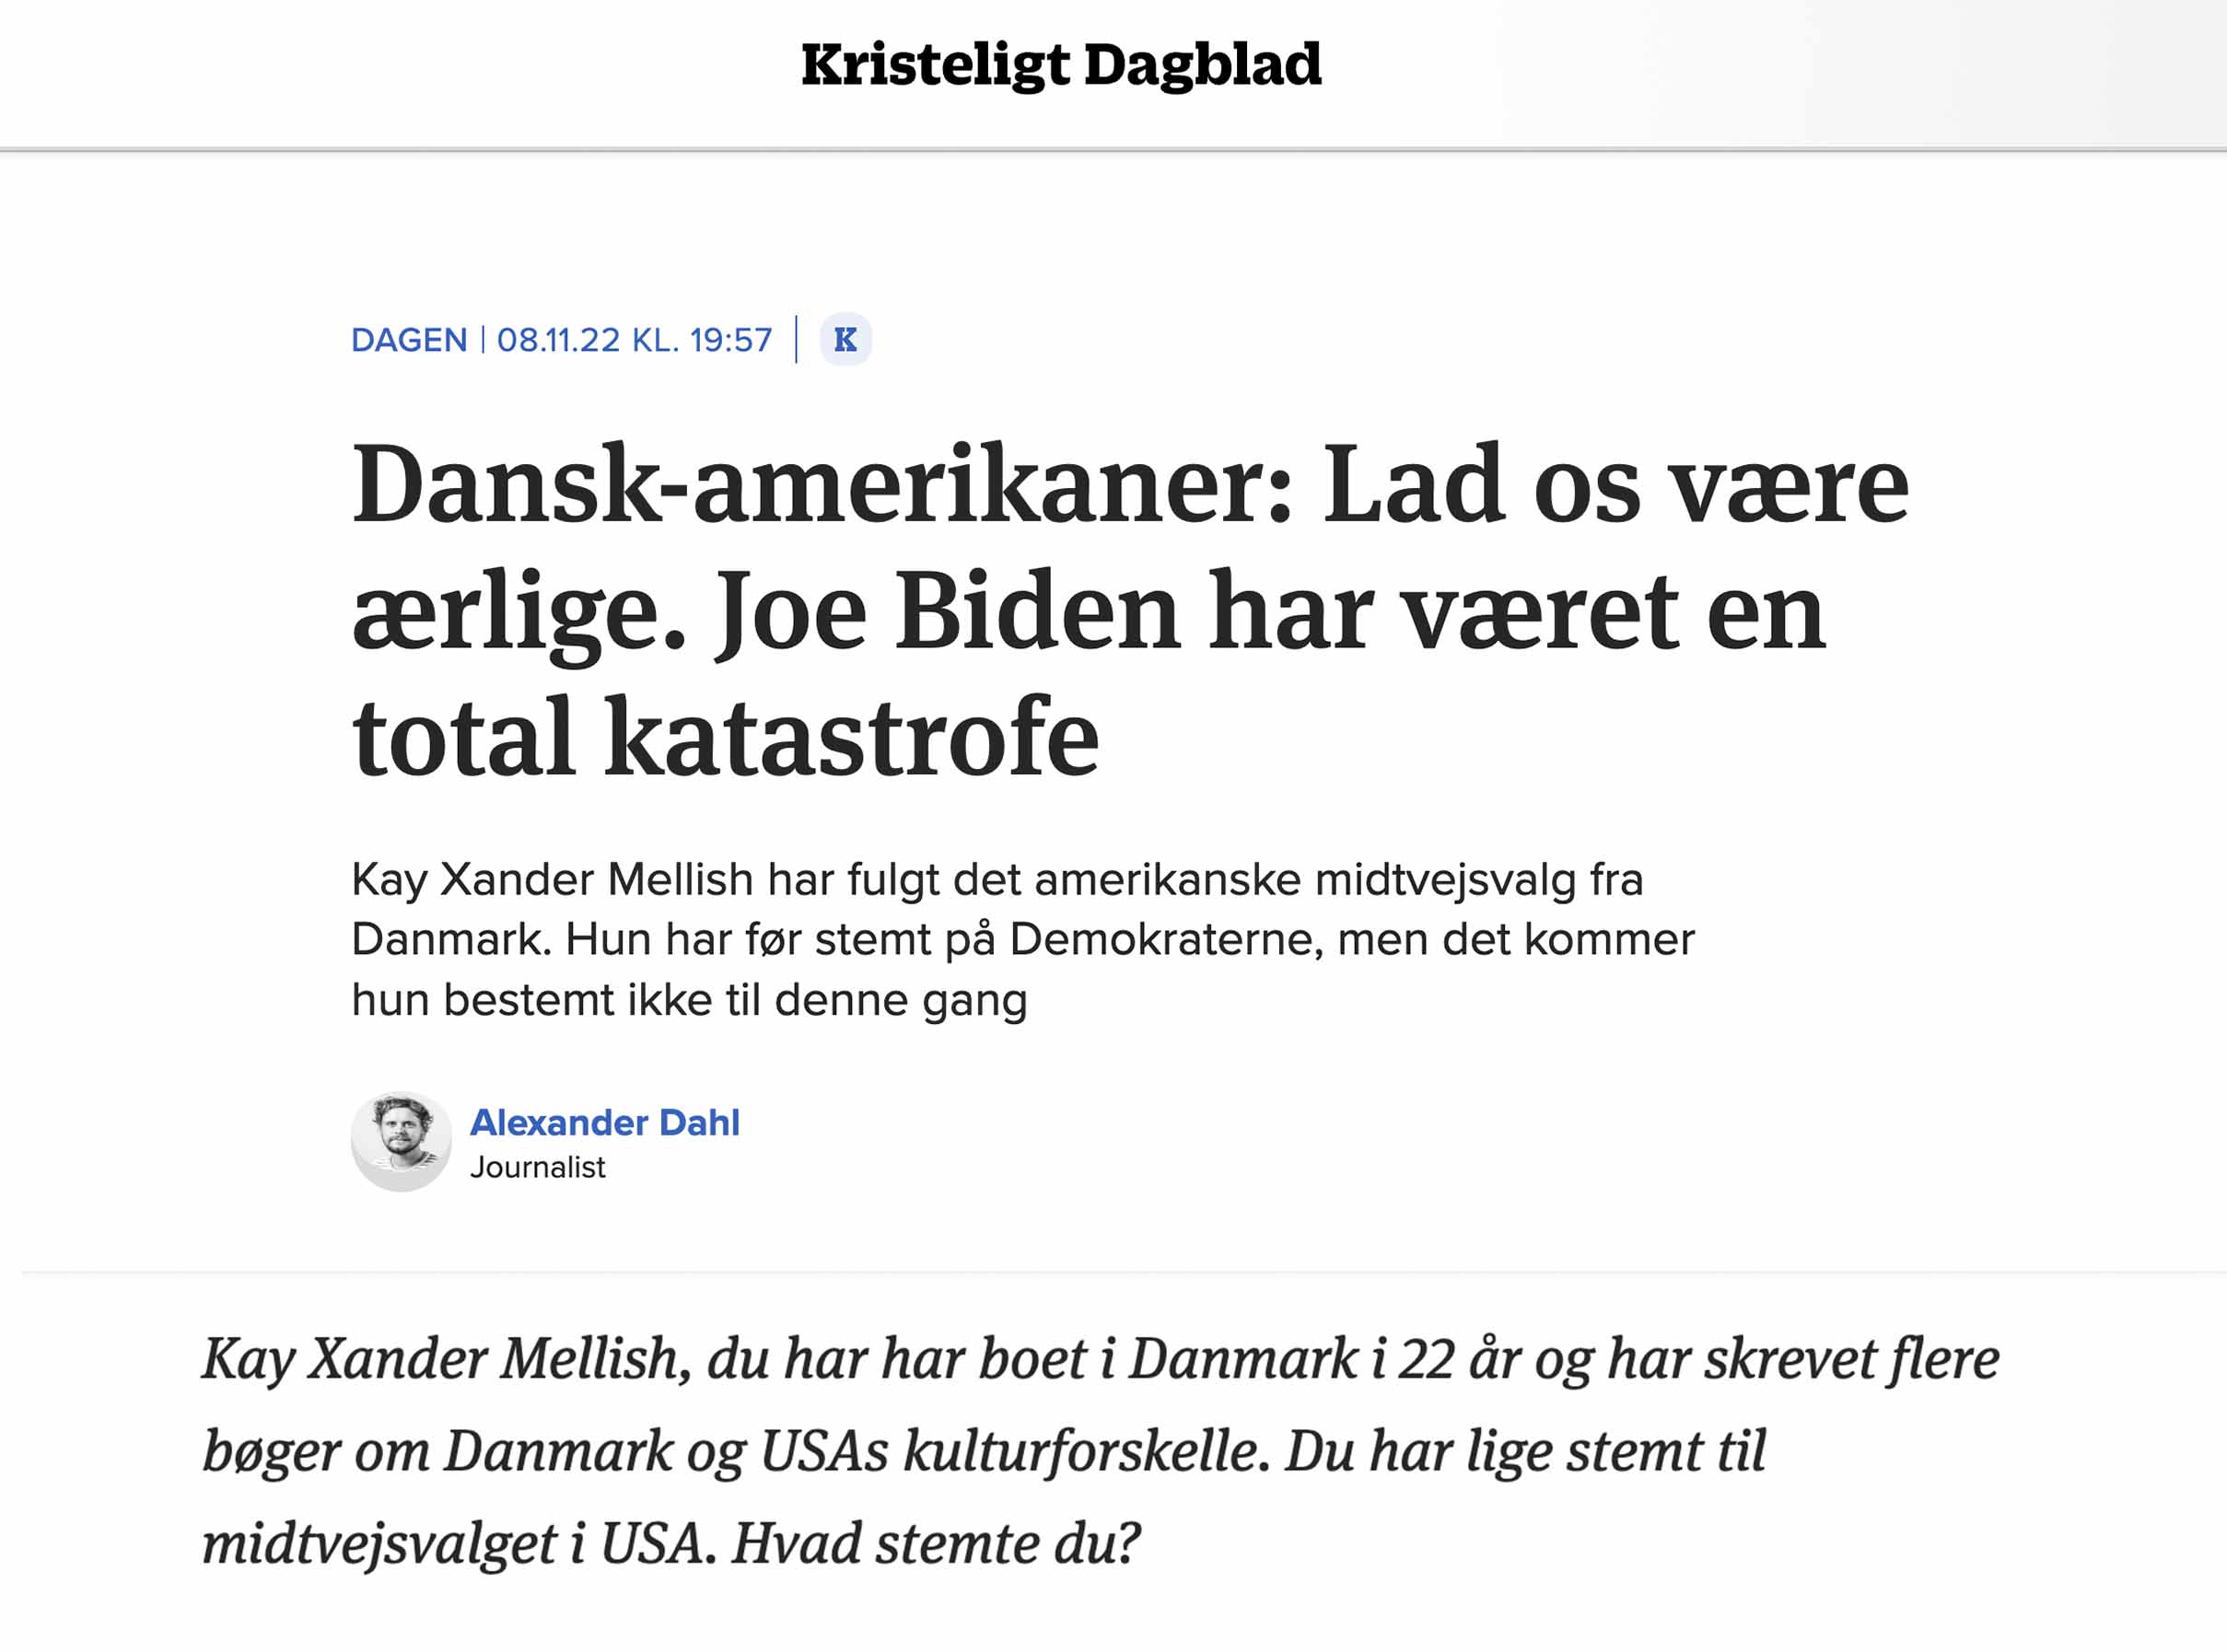 Kay Xander Mellish in Kristeligt Dagblad